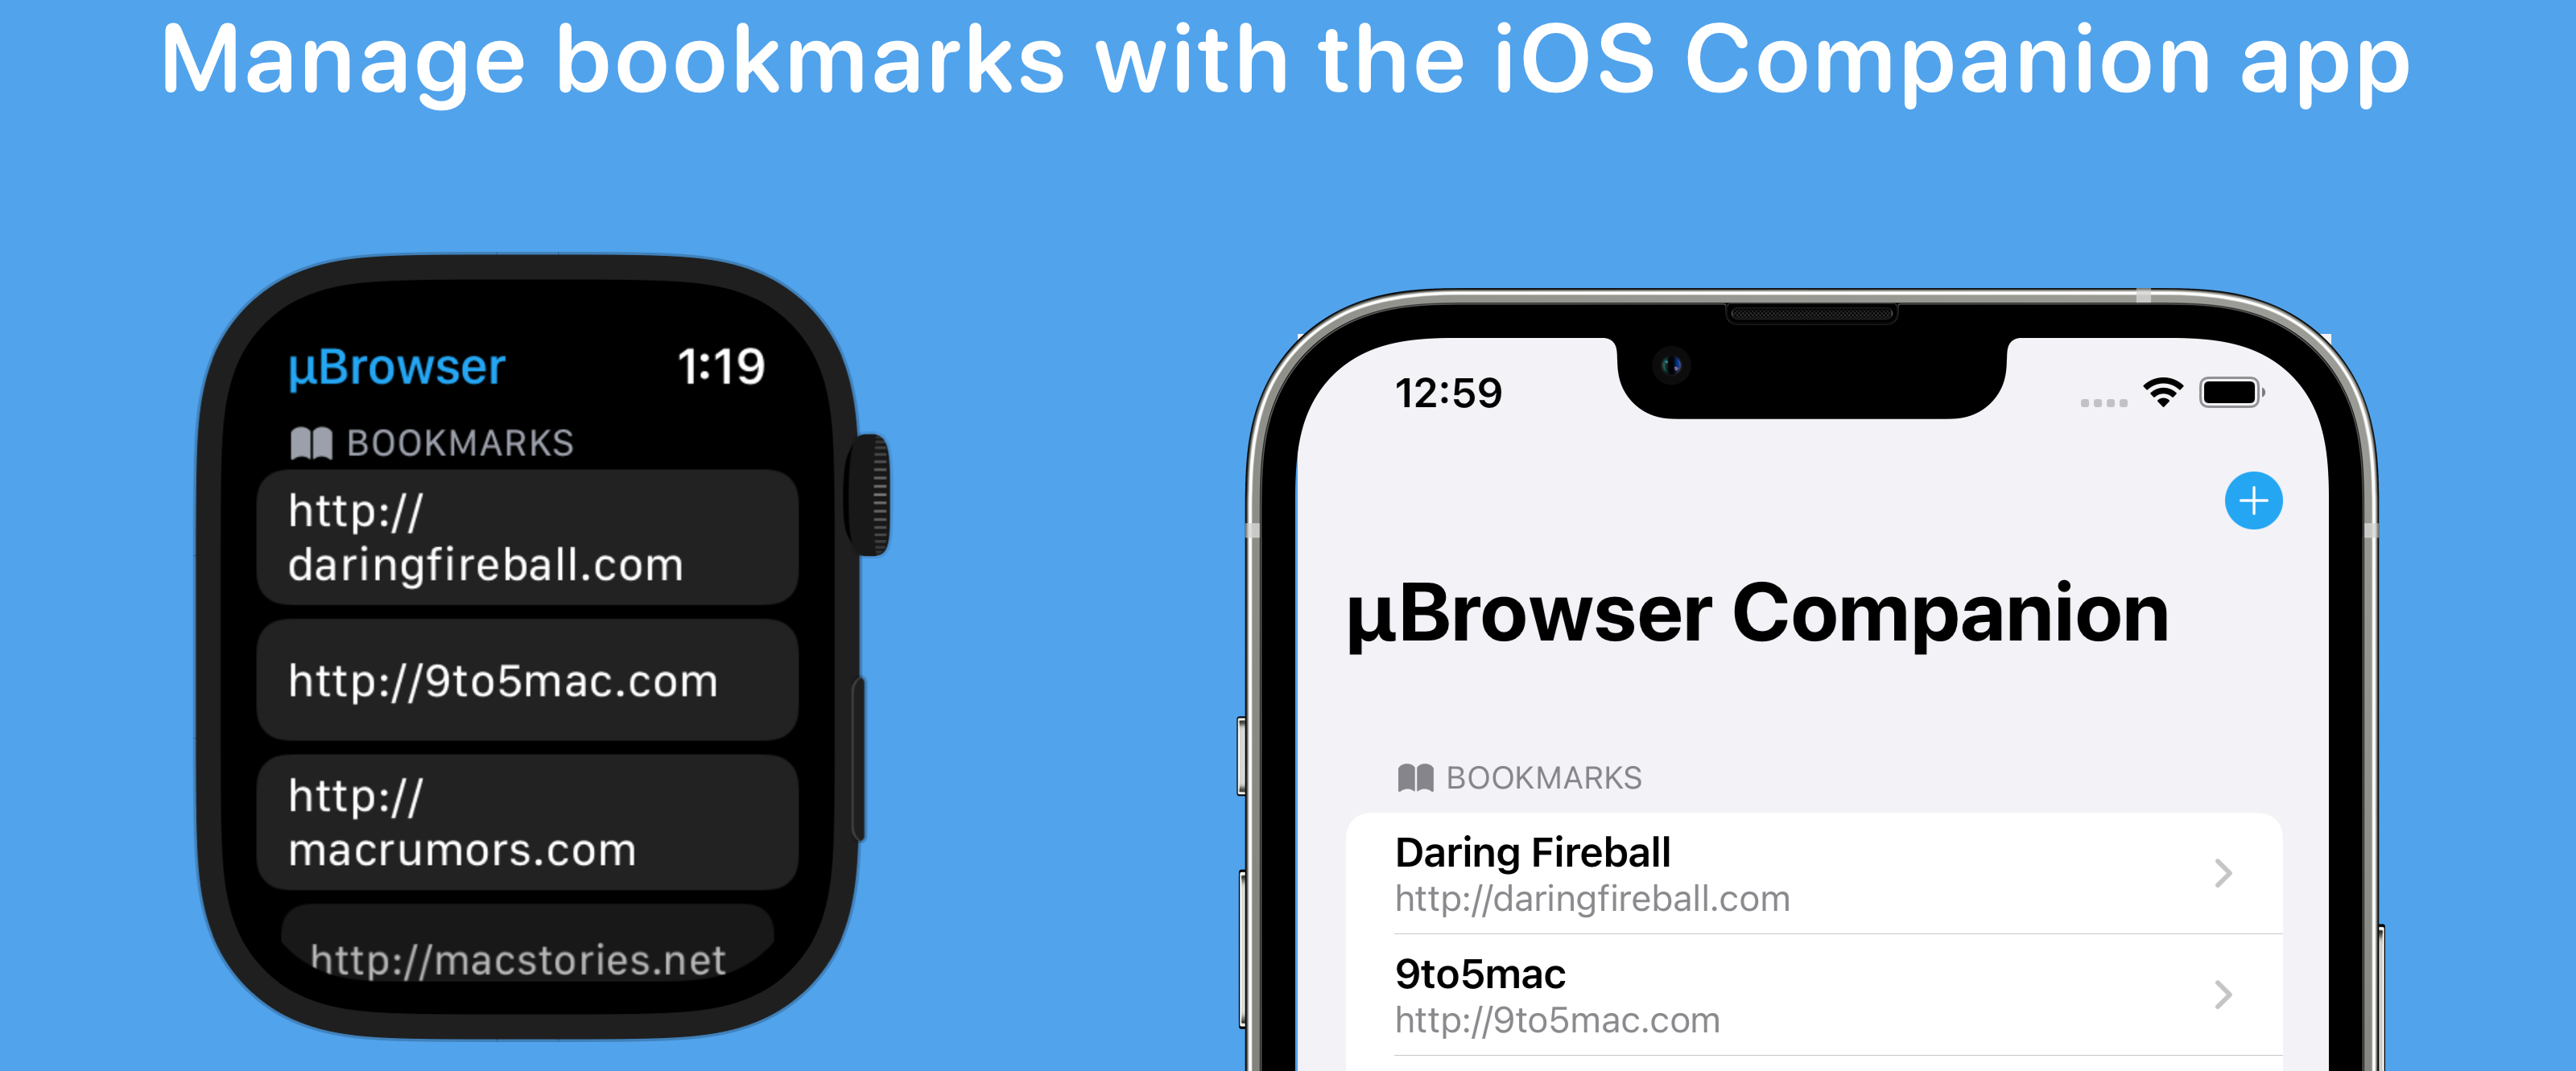 µBrowser companion app bookmark